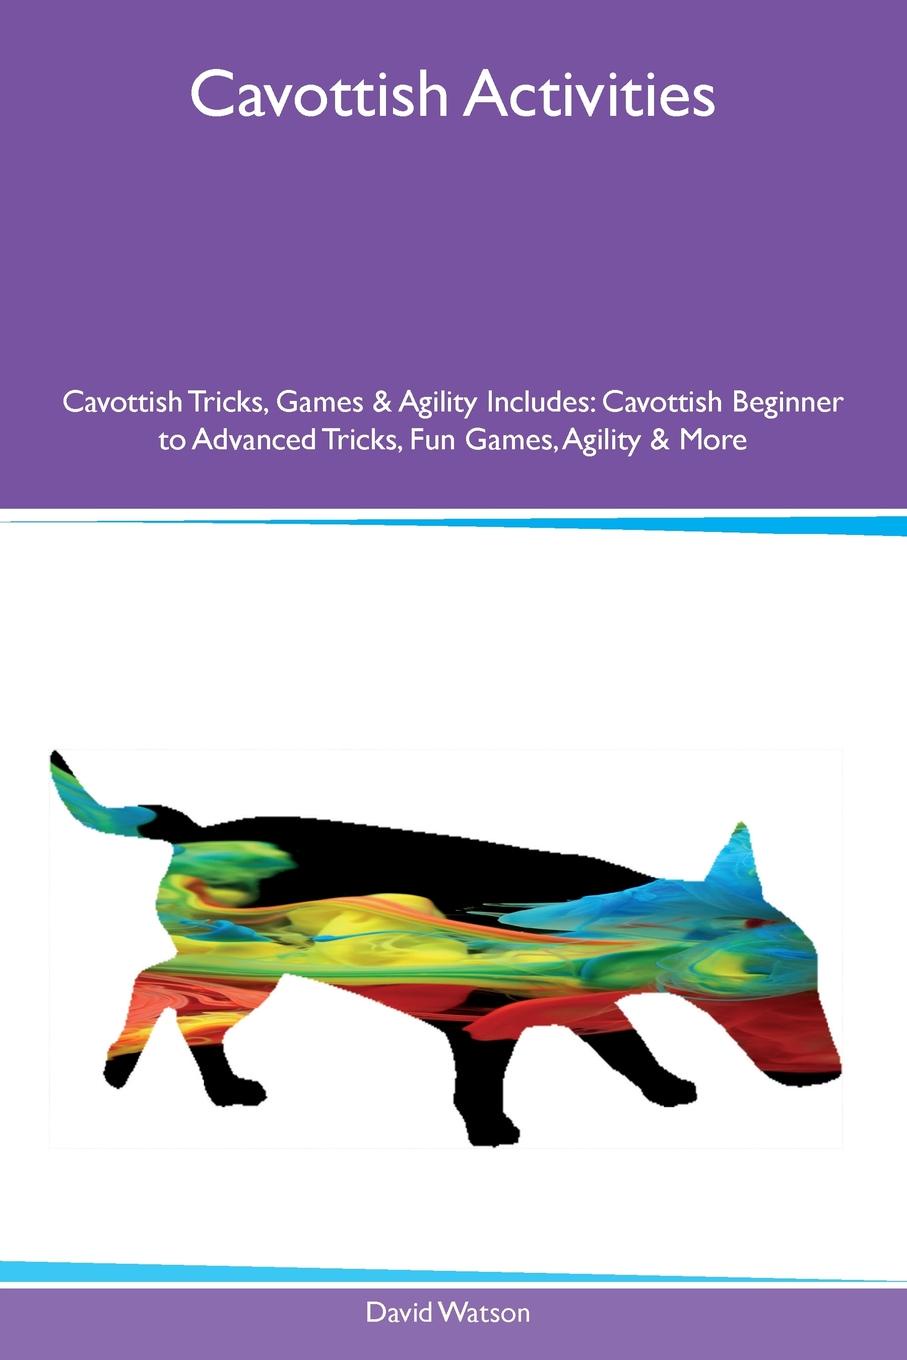 Cavottish Activities Cavottish Tricks, Games & Agility Includes. Cavottish Beginner to Advanced Tricks, Fun Games, Agility & More